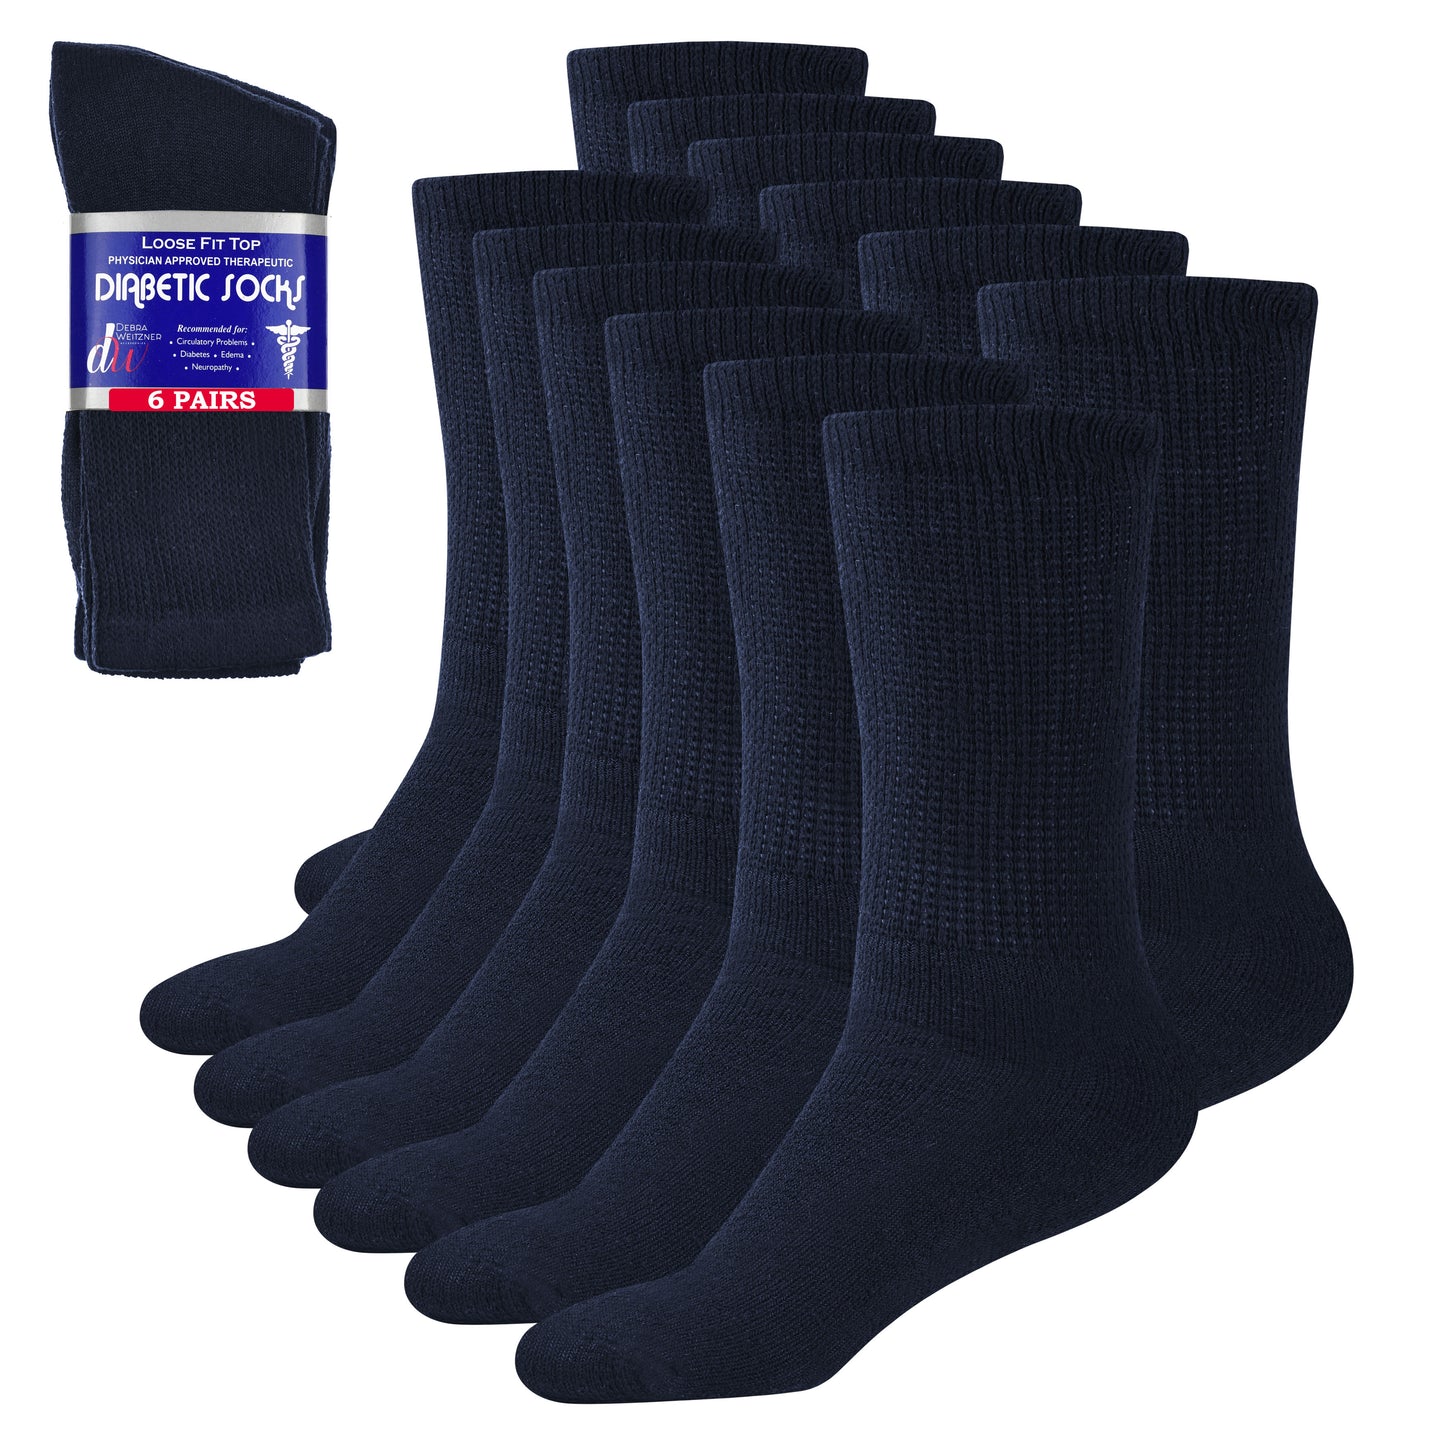 Diabetic Crew Socks for Men and Women Non Binding- 6 Pairs